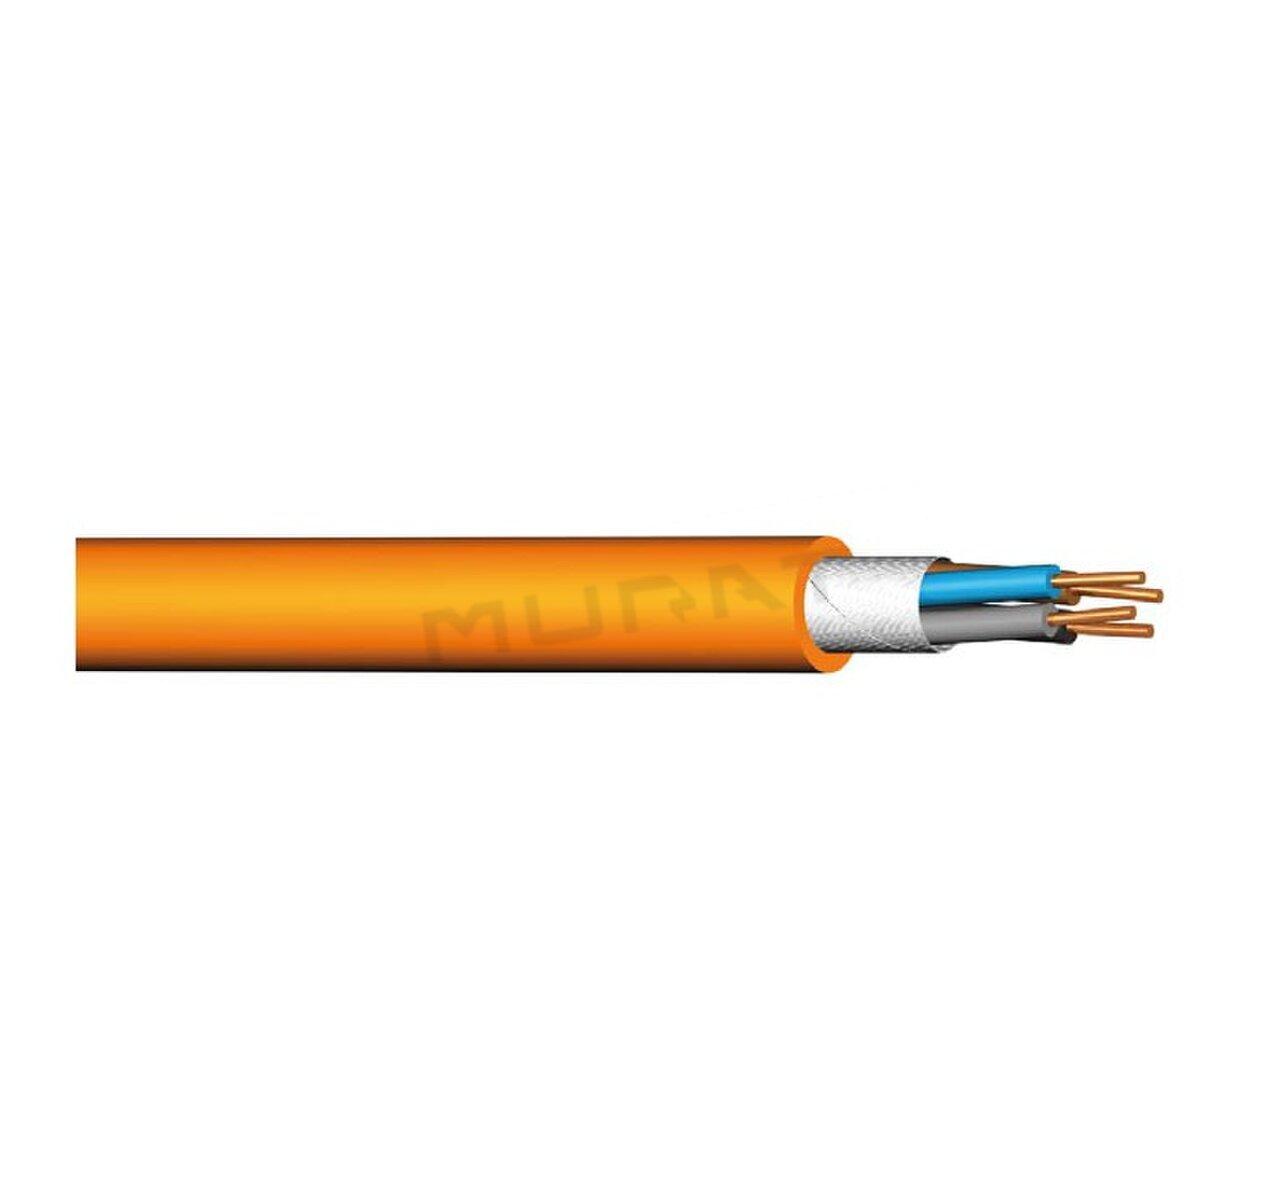 Kábel NHXH-J 3x150+70 mm2 FE180/E30 silový